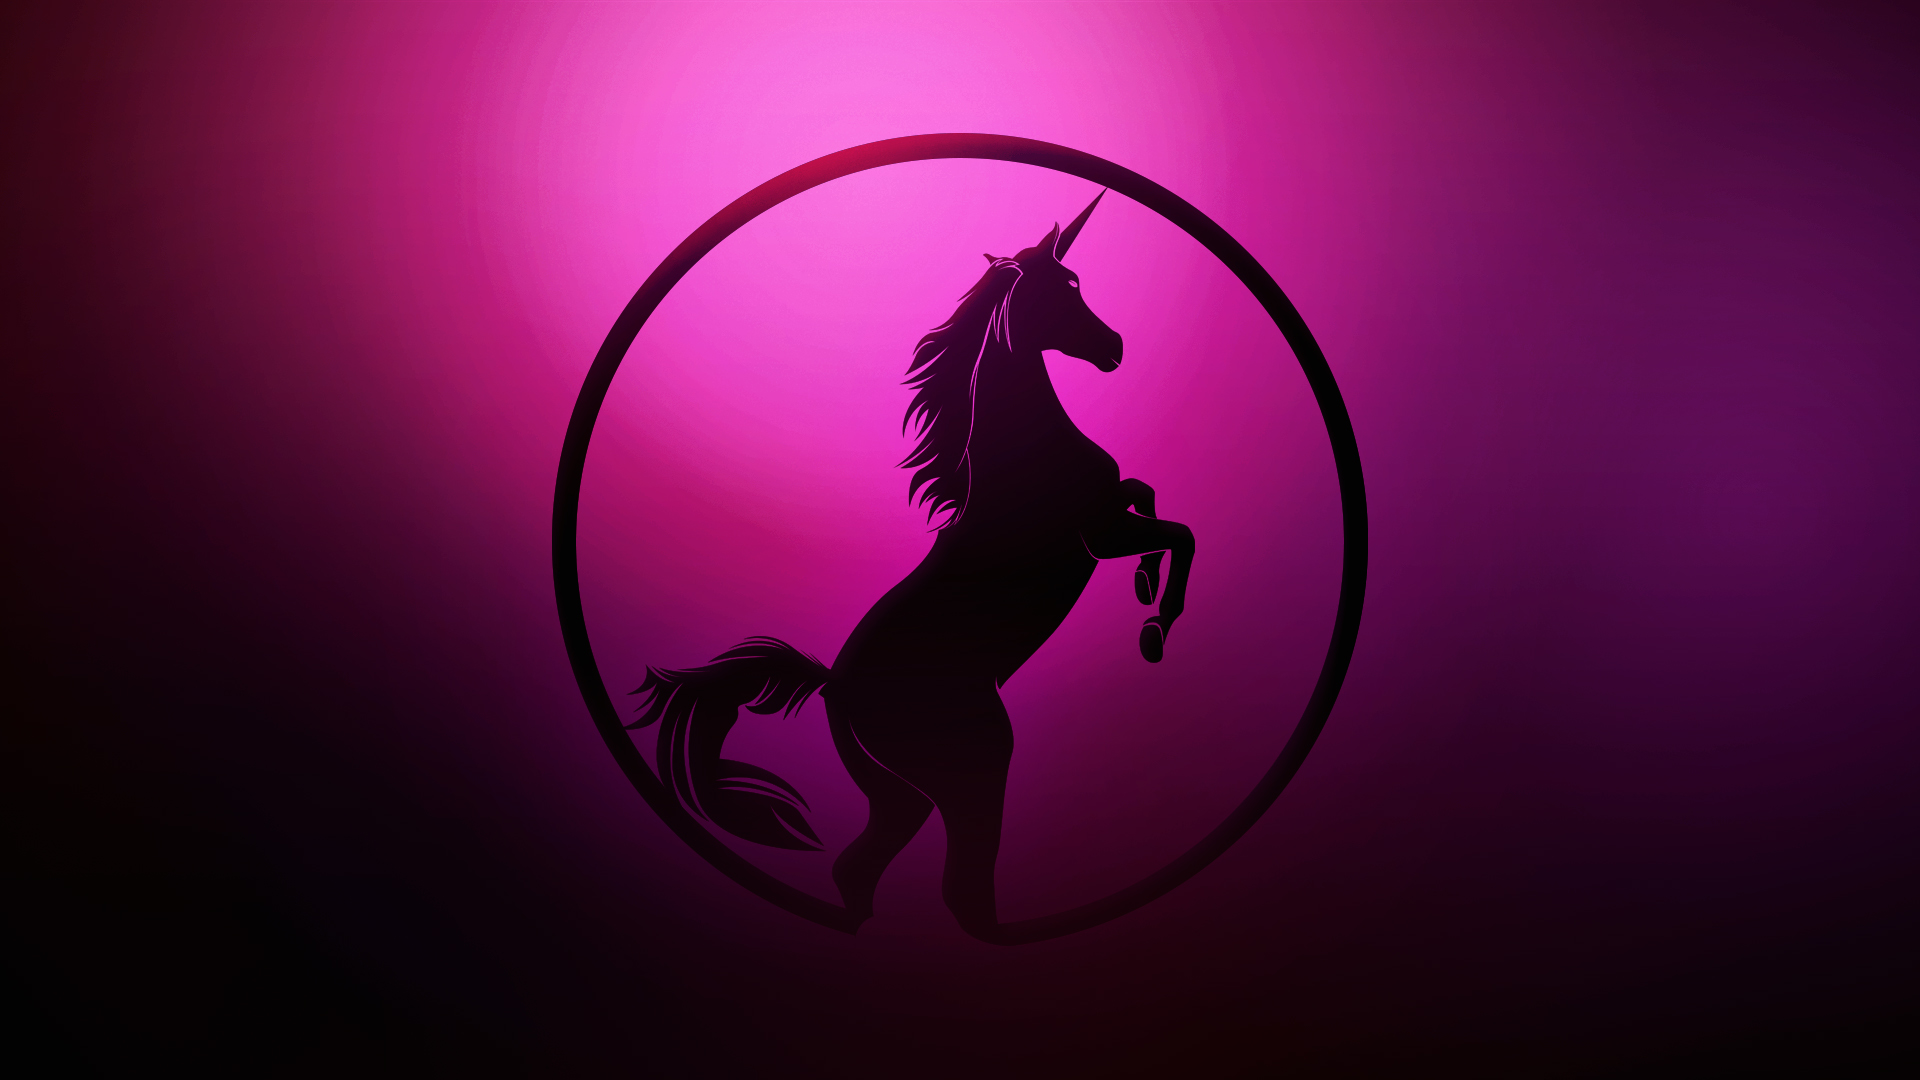 Ubuntu Utopic Unicorn 14.10  + speed art +(Psd+Ai)